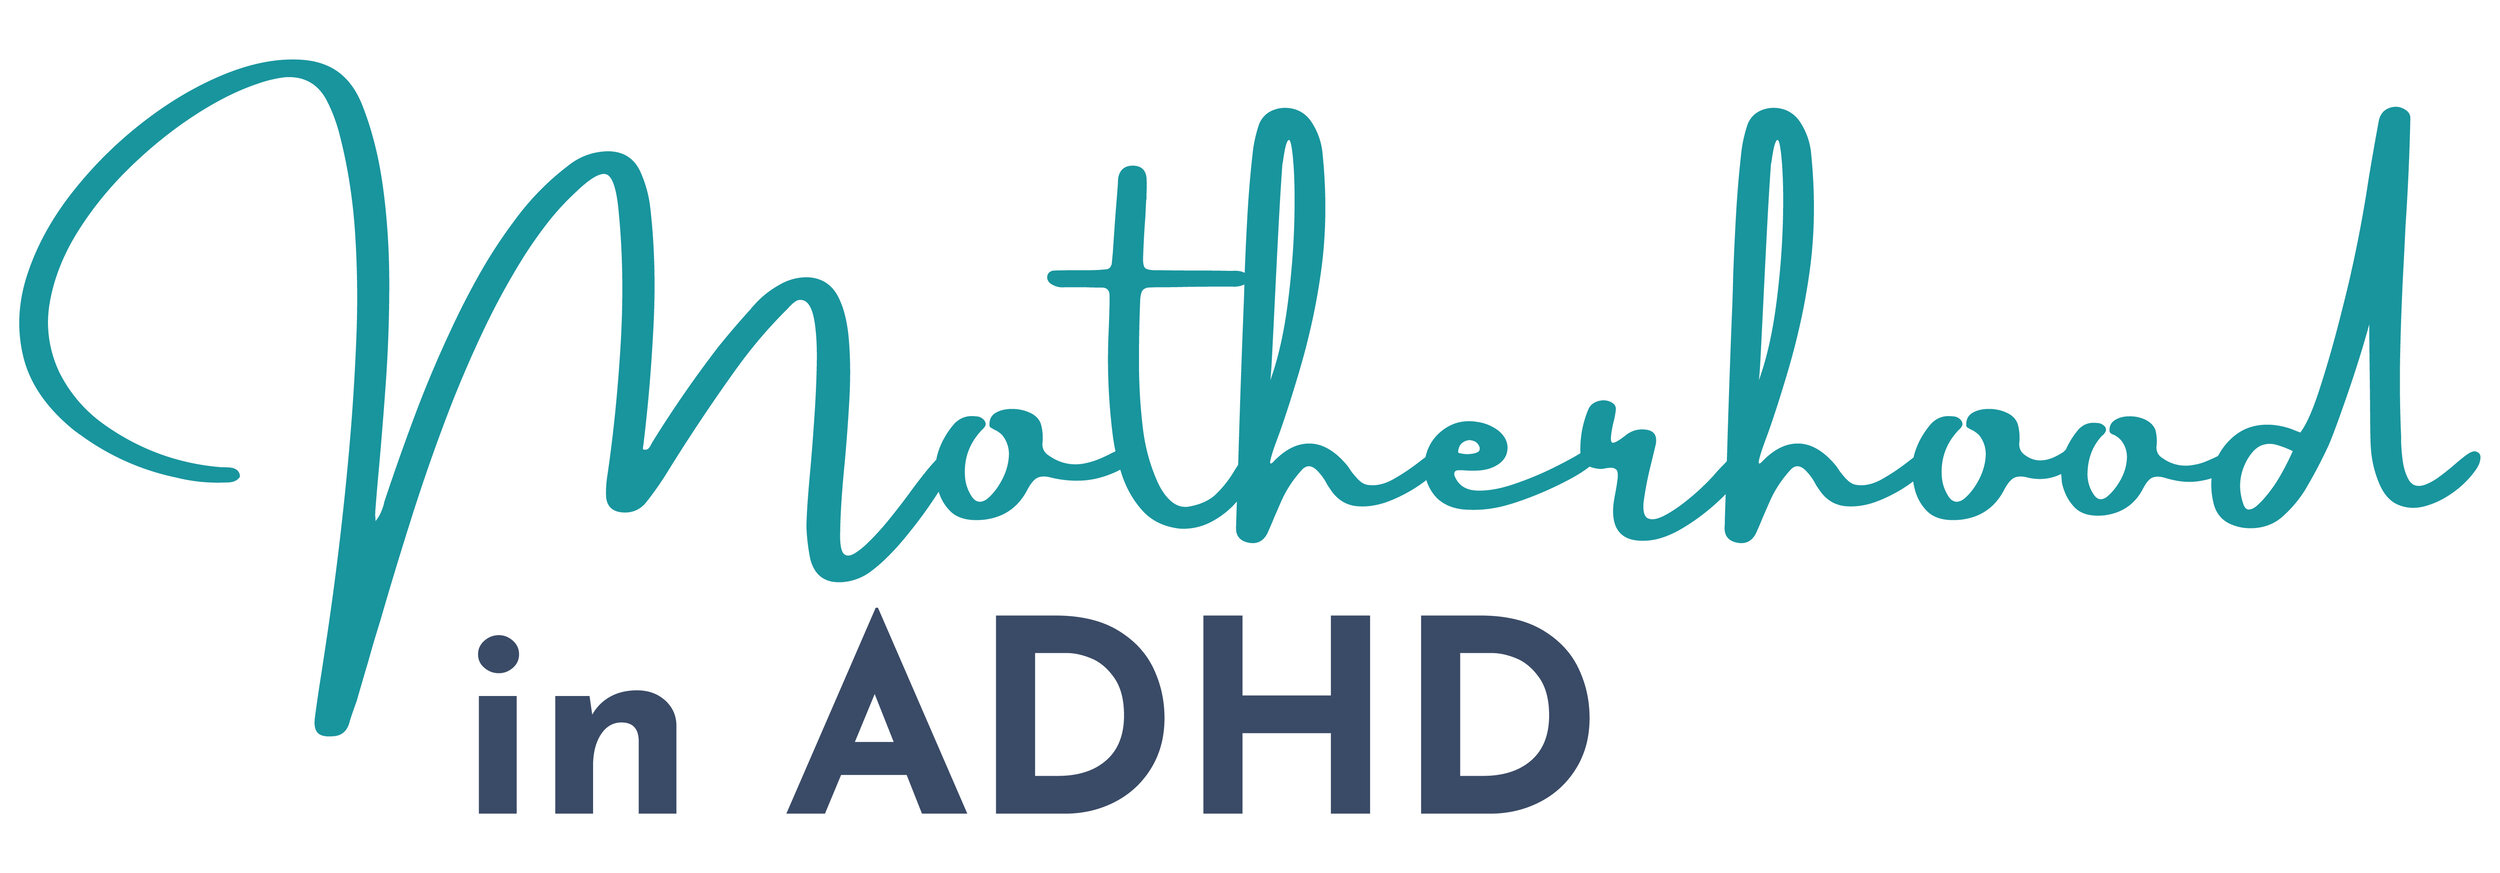 Patricia Sung ▪ Motherhood in ADHD